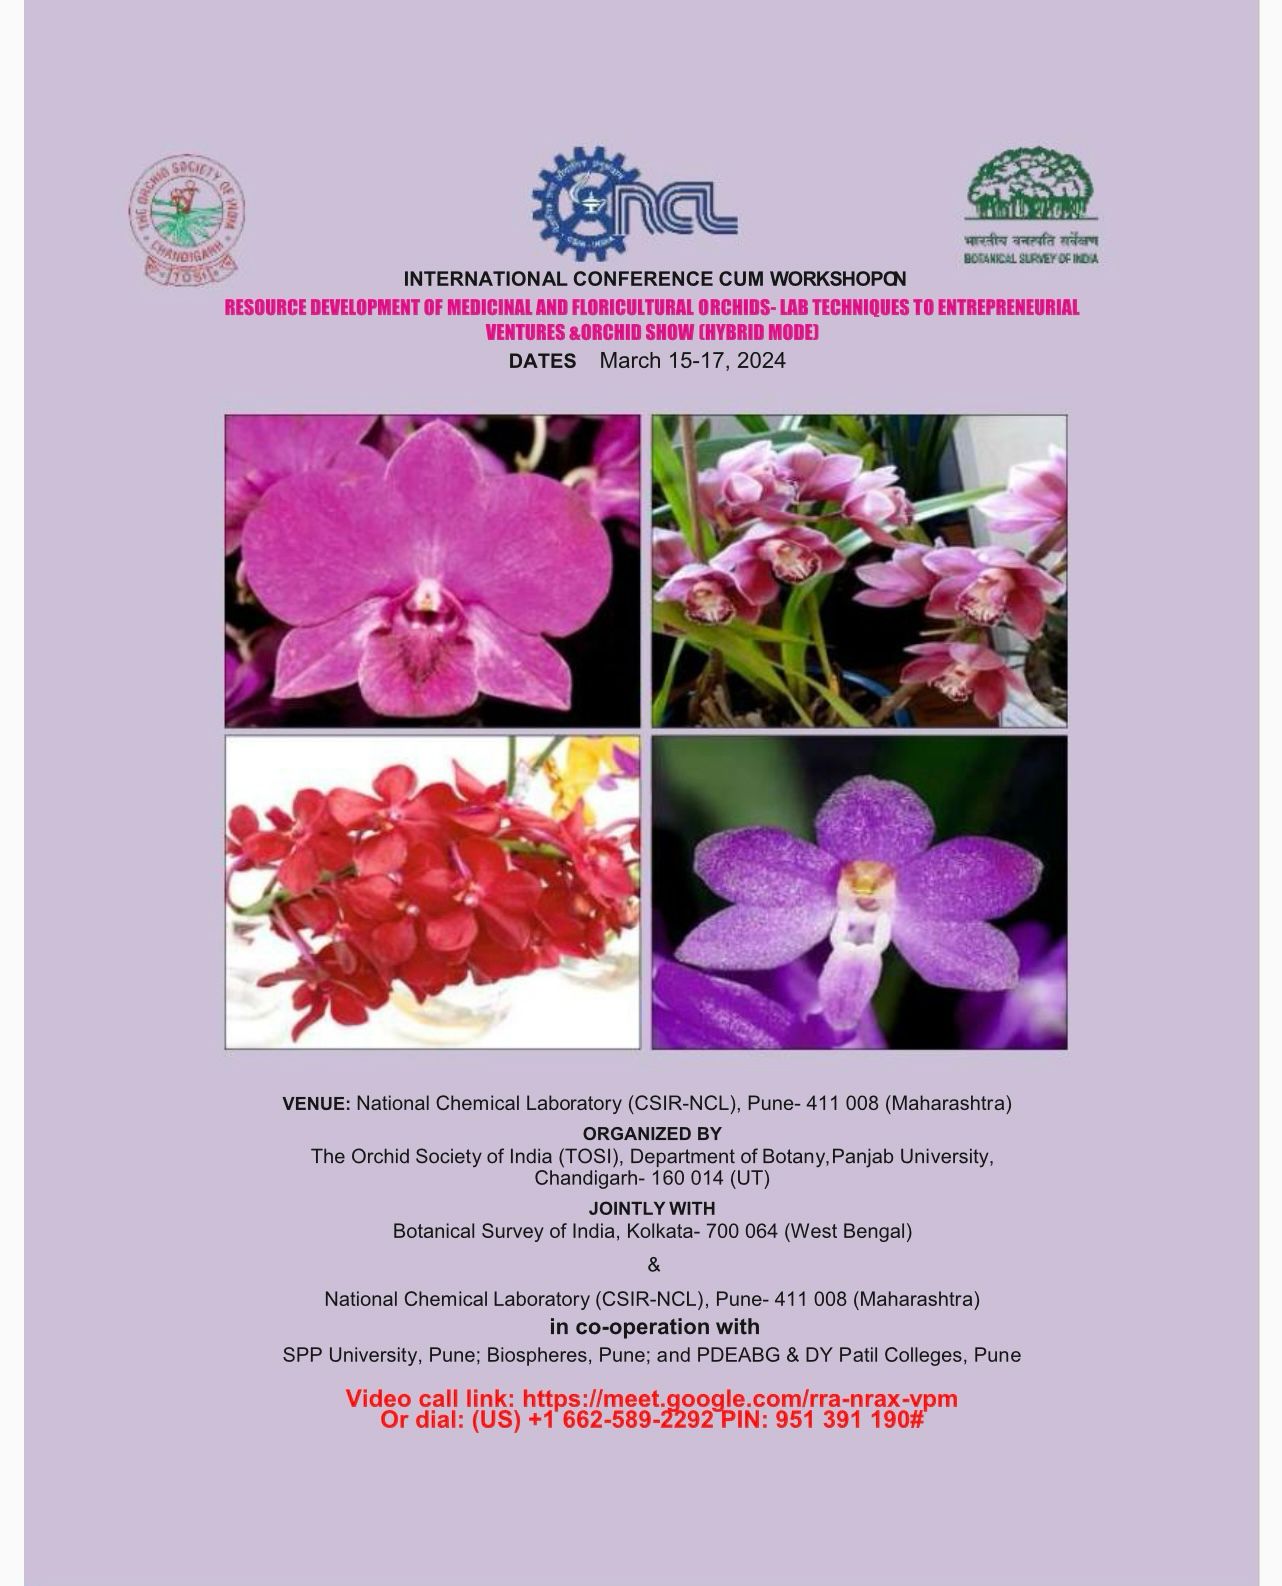 International Conference cum Workshop on Orchids